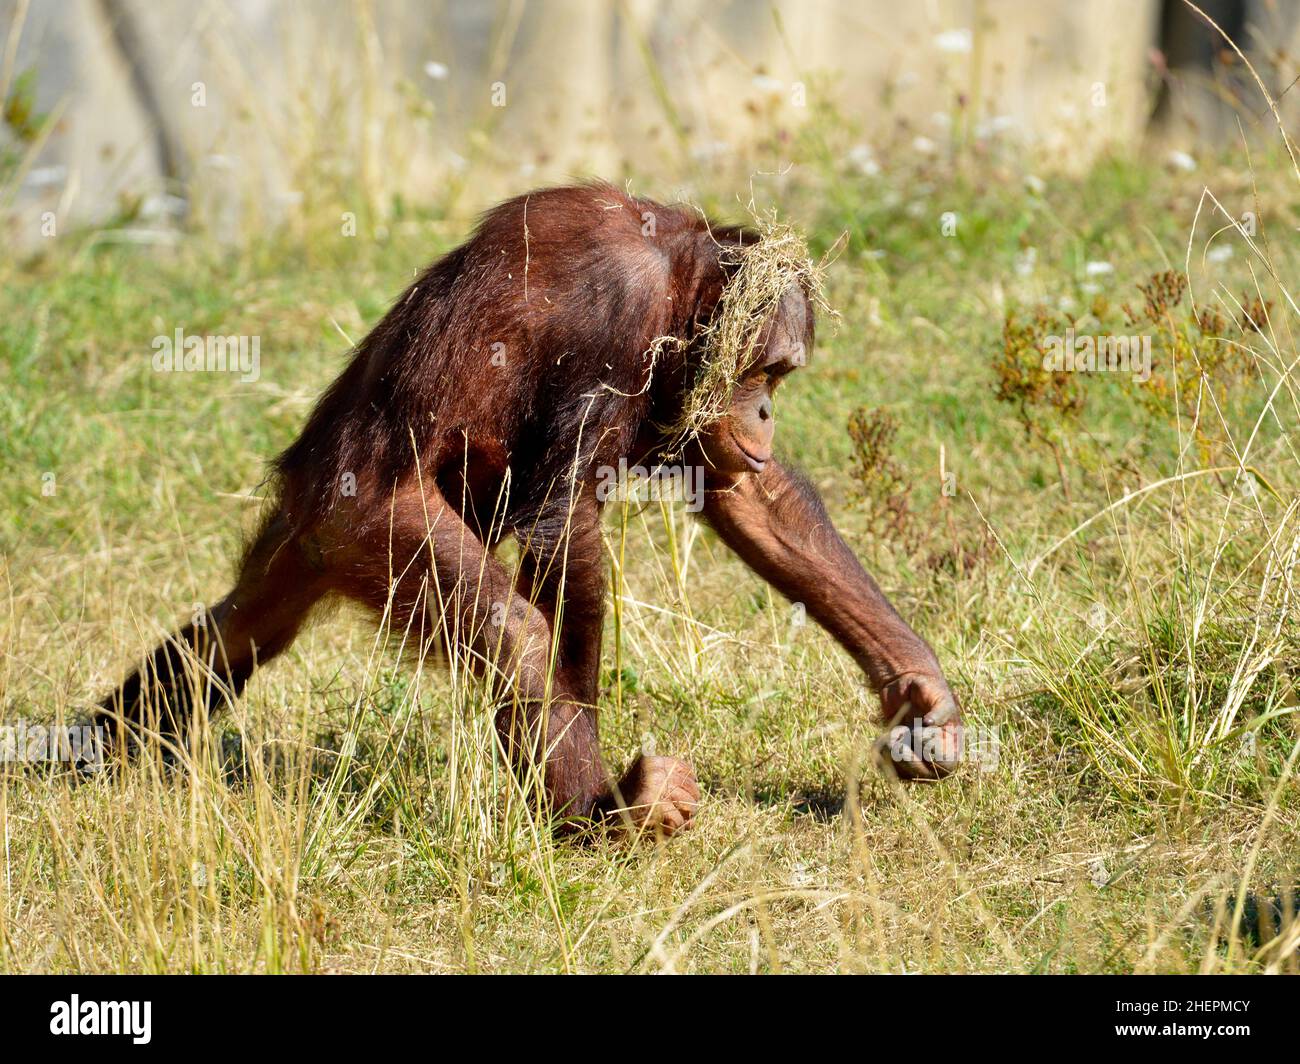 Giovane orangutano (Pongo pygmaeus) che cammina con erba sulla testa Foto Stock